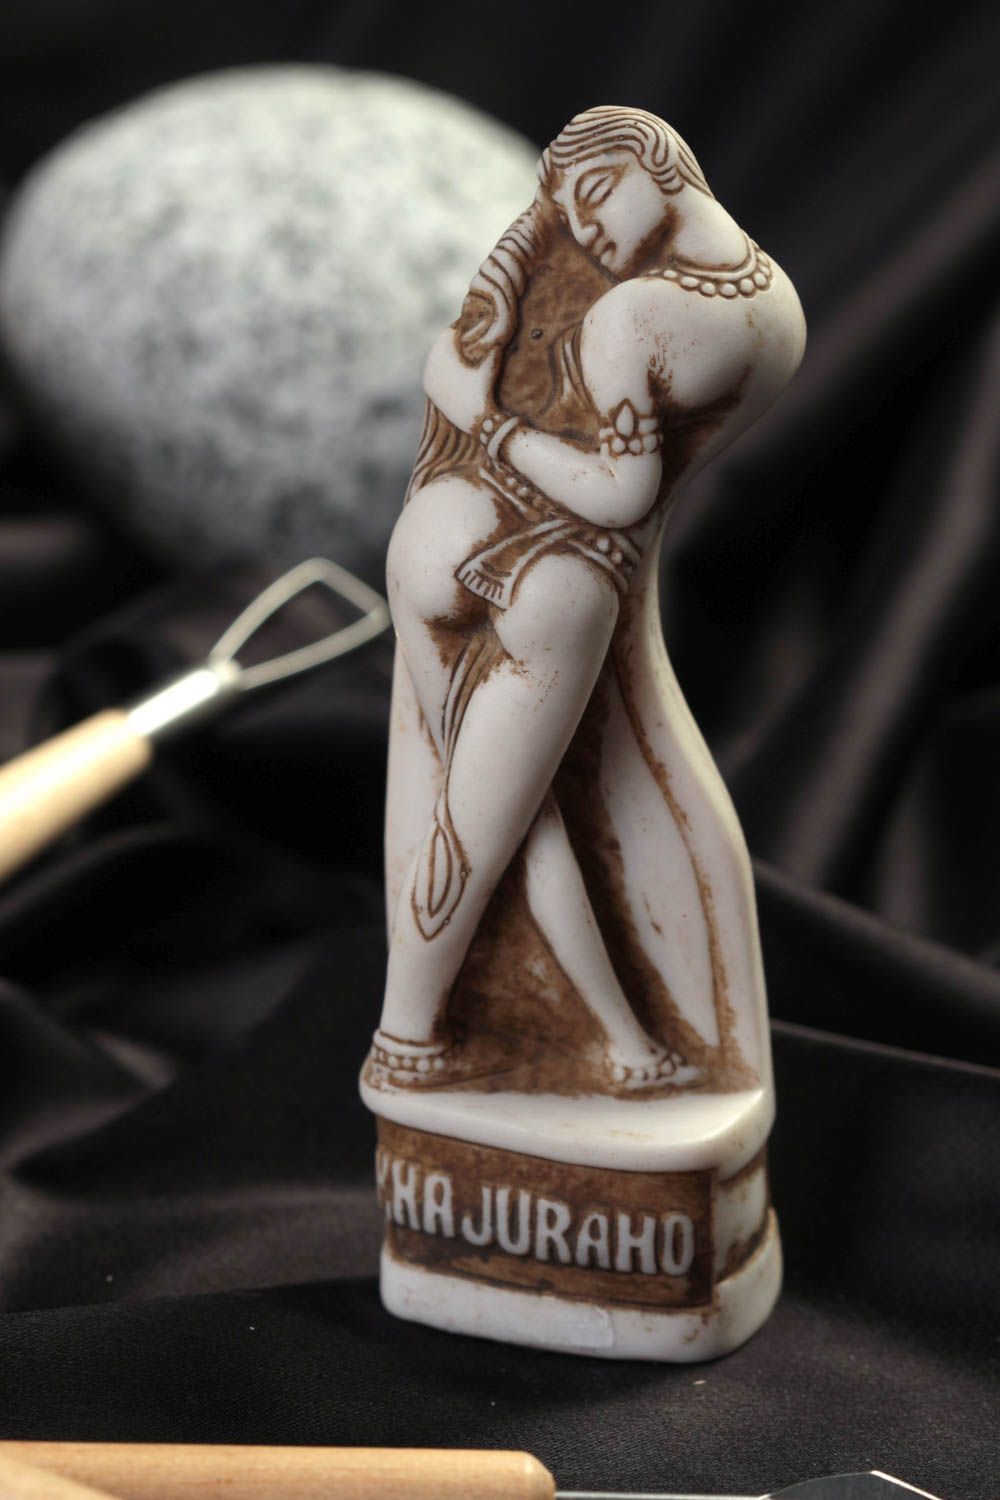 Figura en miniatura hecha a mano de resina elemento decorativo souvenir original foto 1